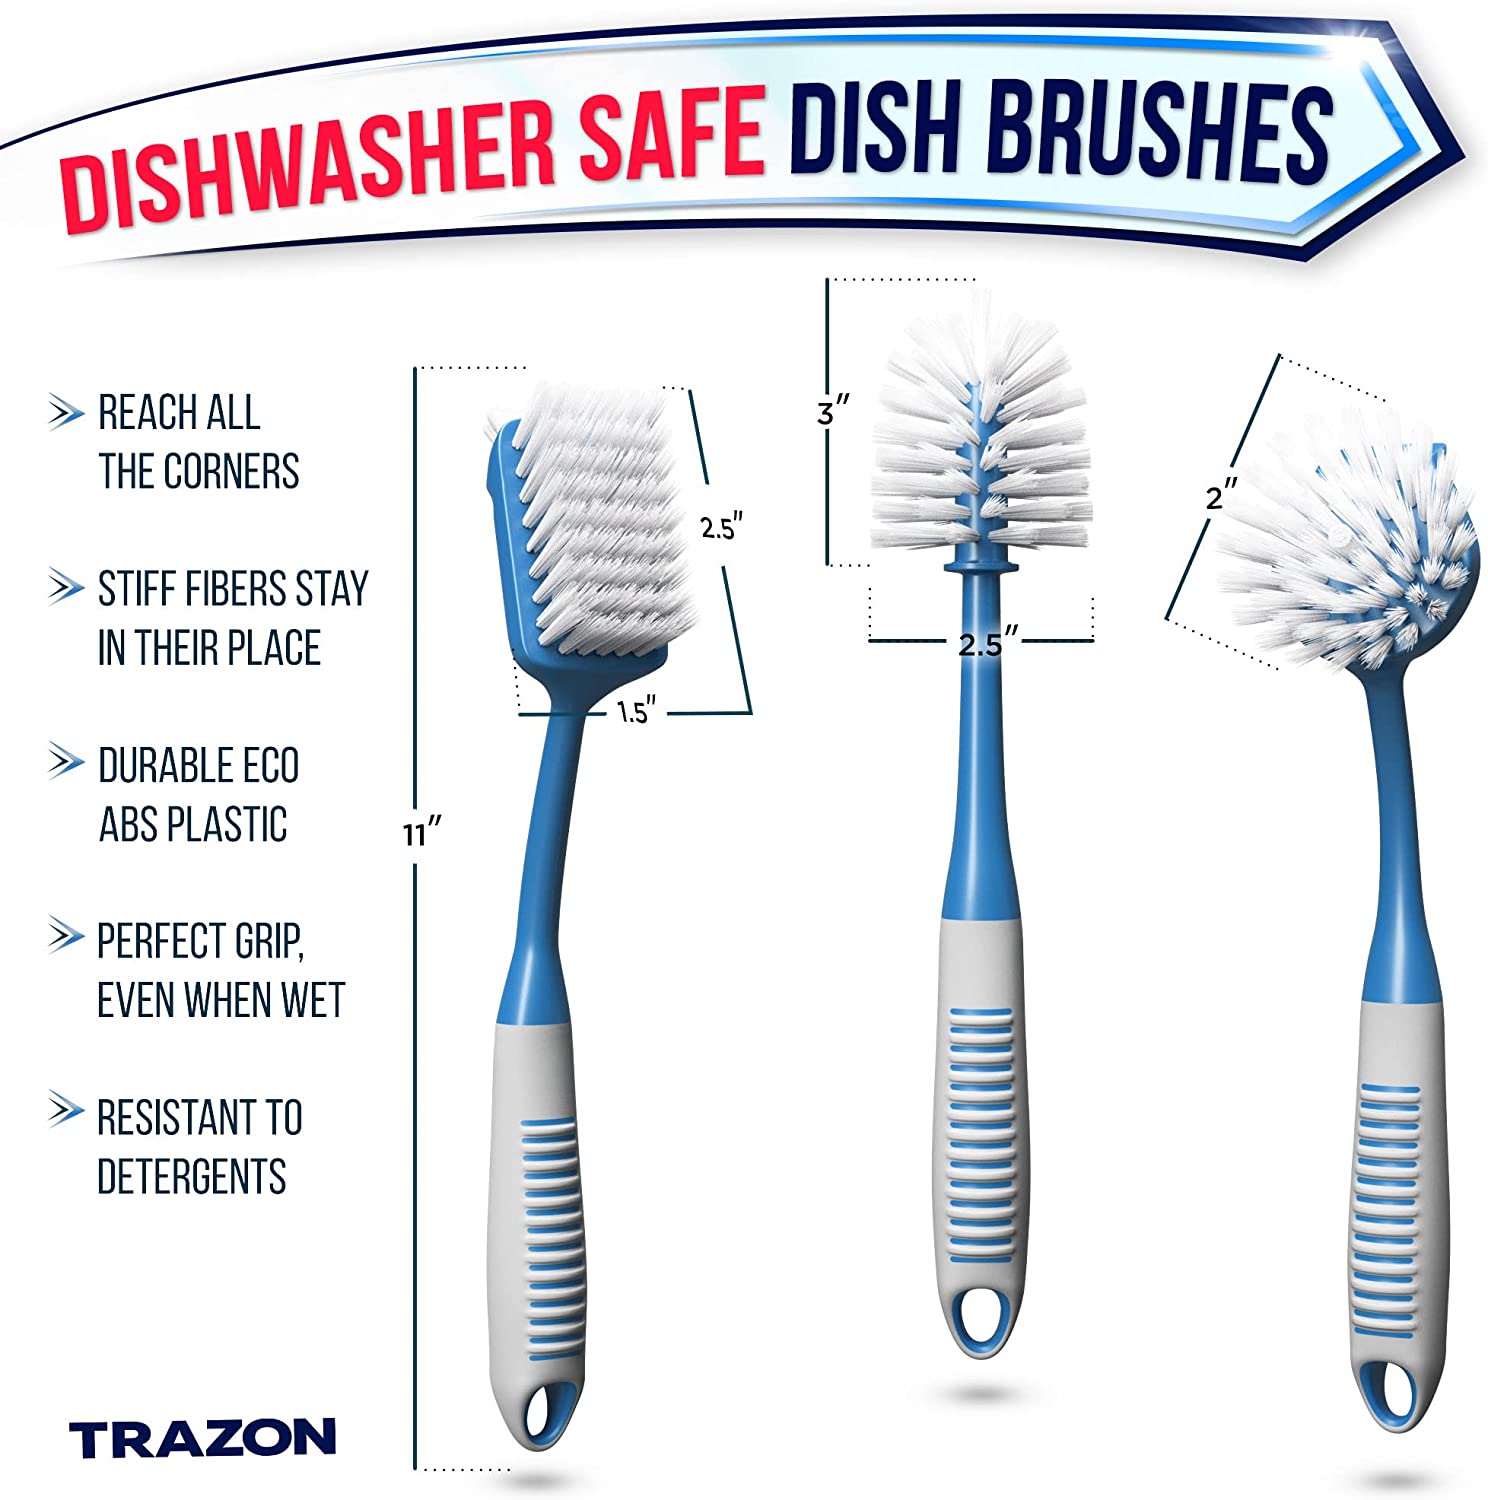 ITTAHO Dish Scrub Brush Kit, Kitchen Brush Set for Cleaning - 3 Pack